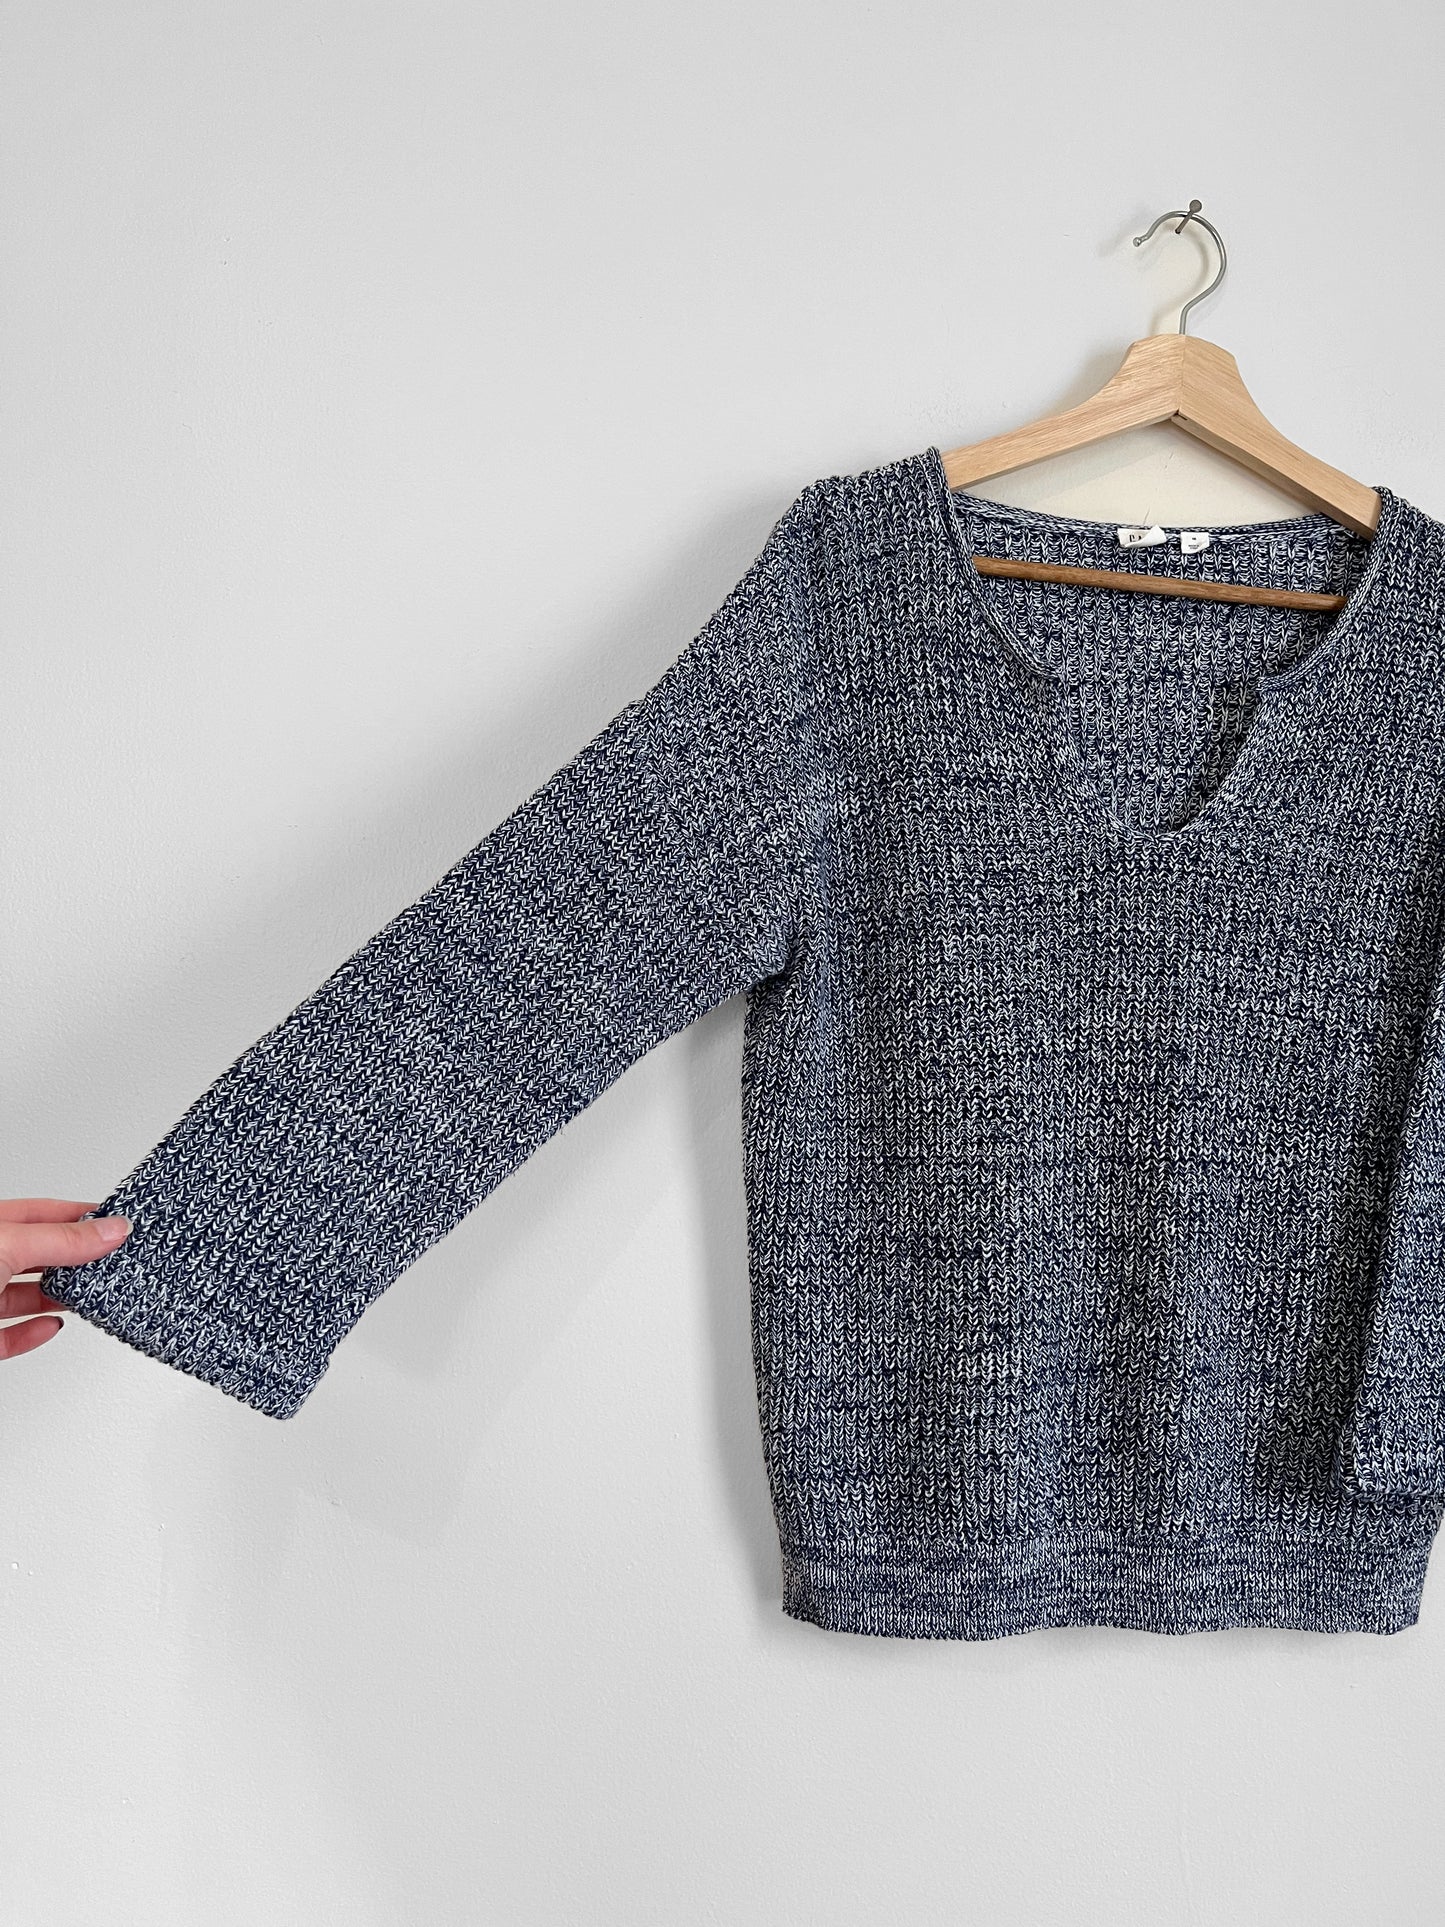 navy marble knit pullover sweater (medium)